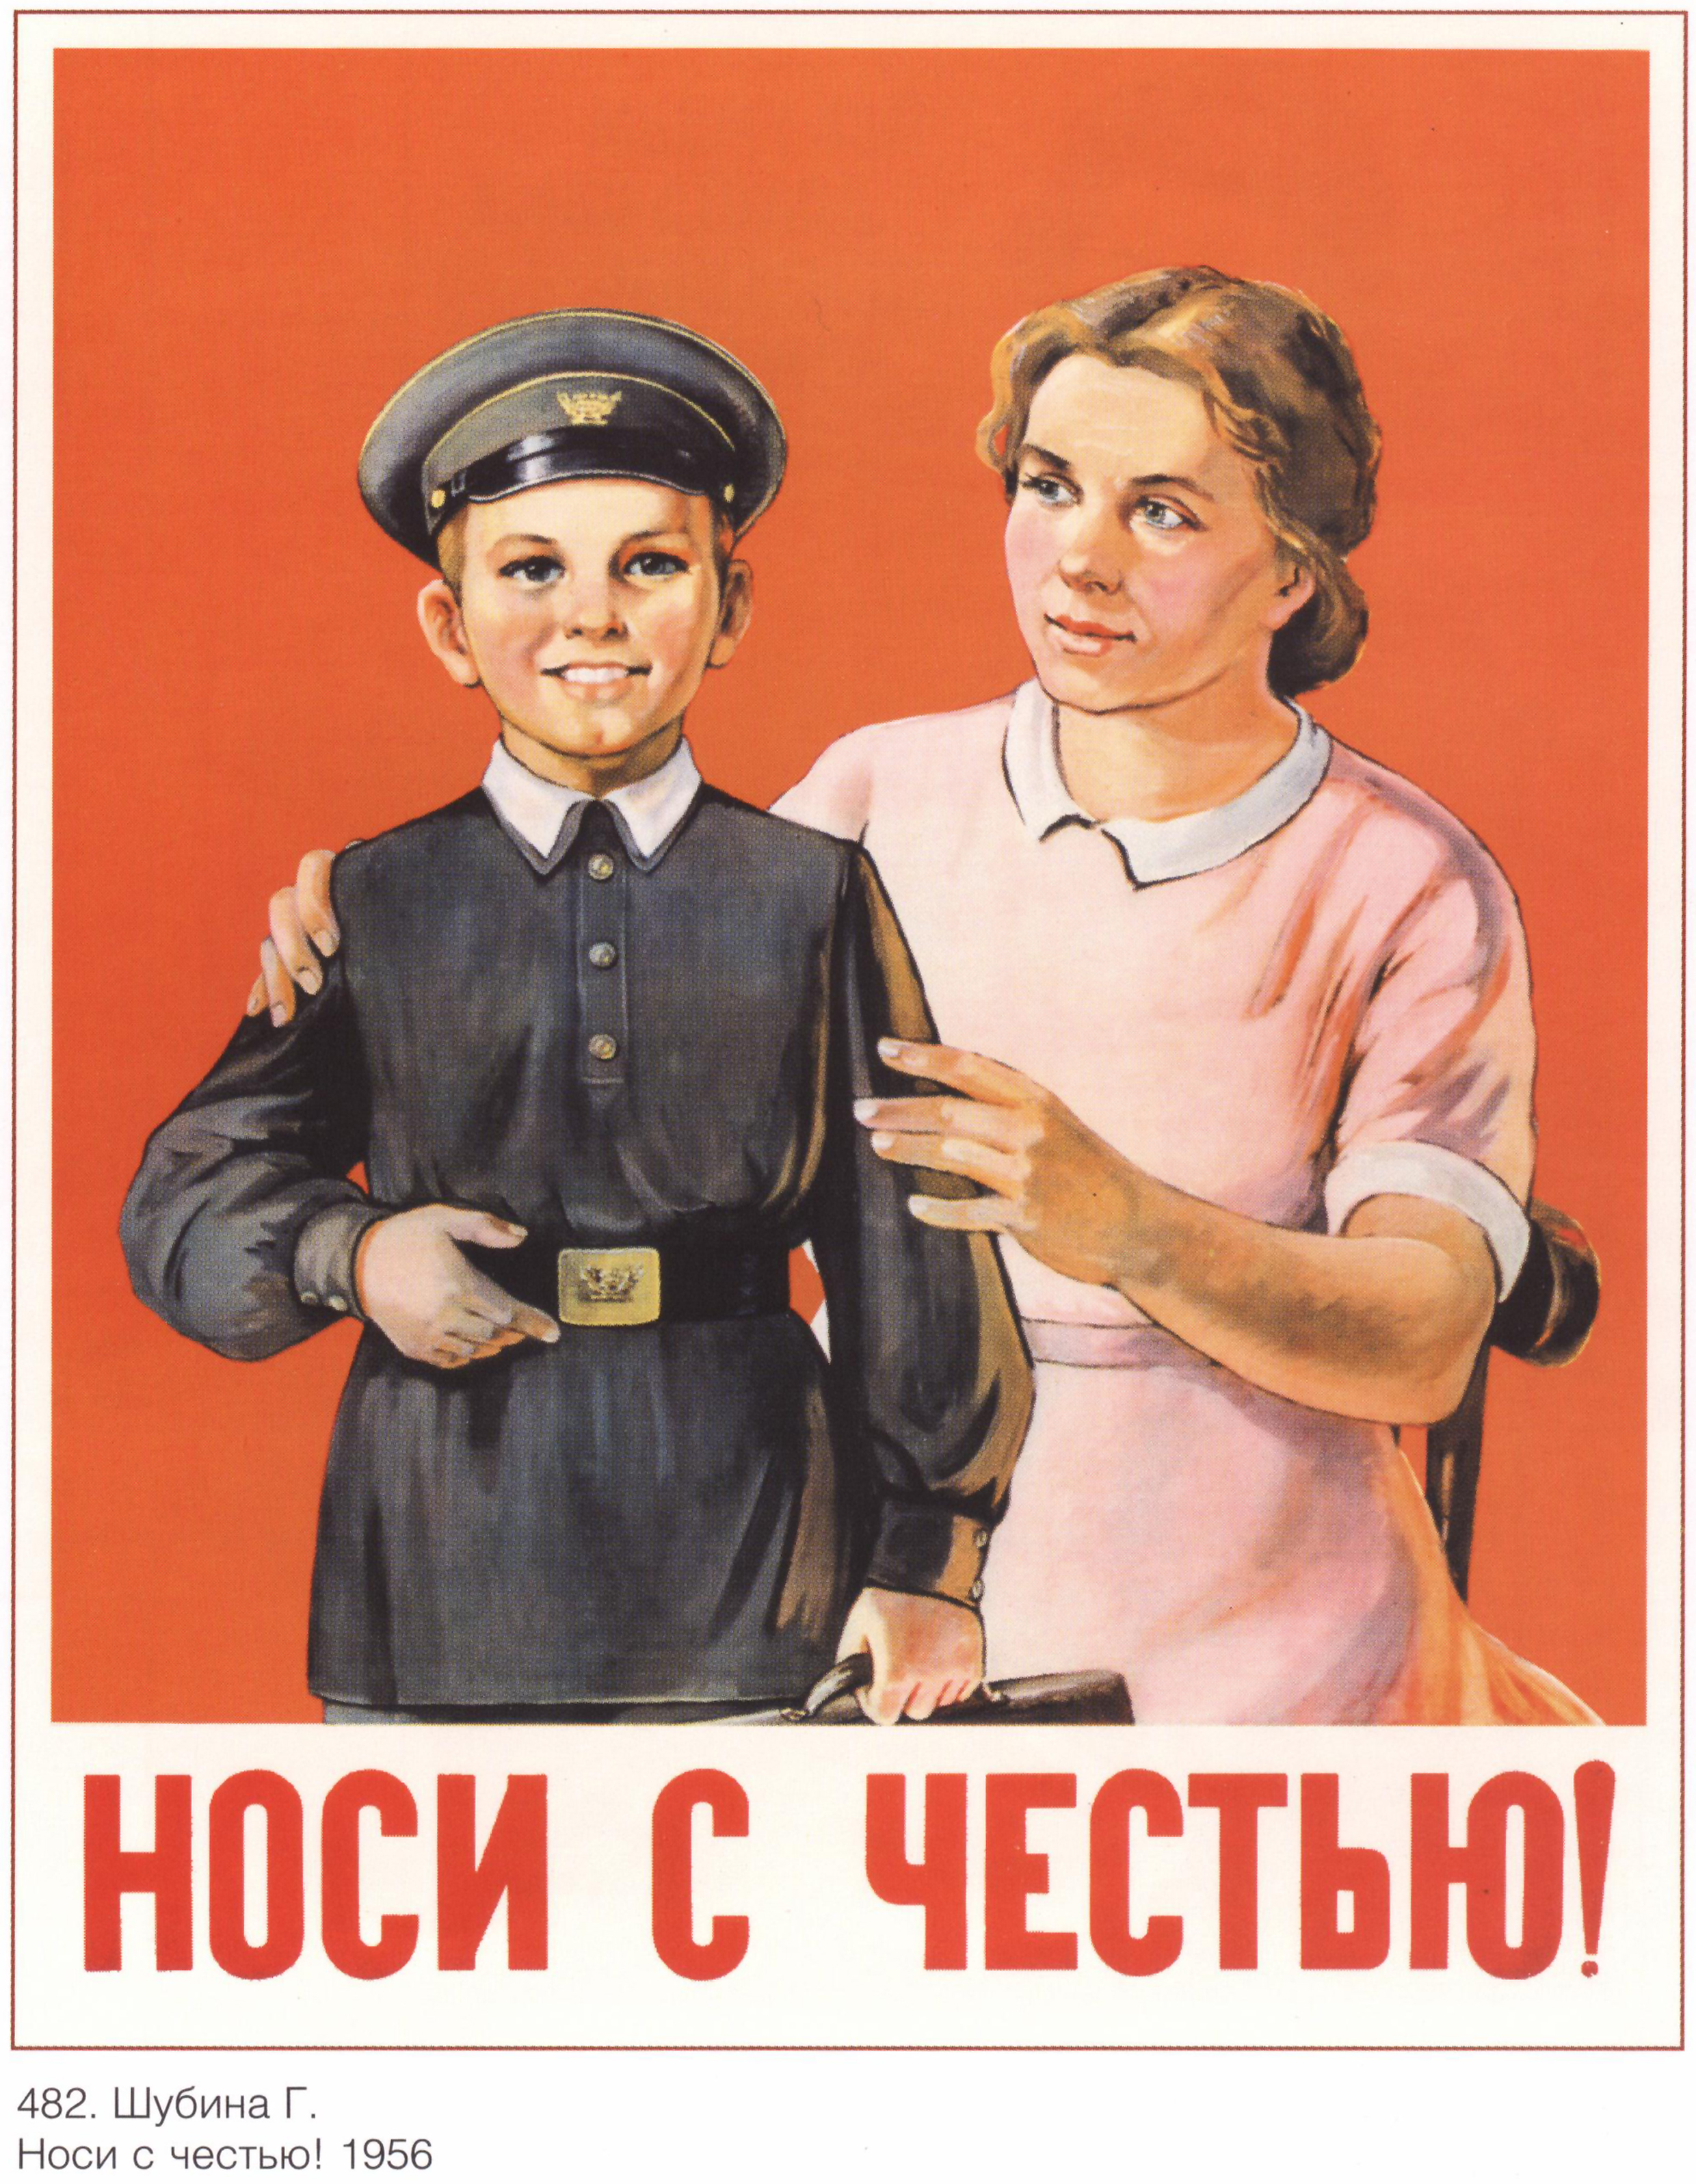 Плакат прошлых лет. Советские плакаты. Советские платки. Агитационные плакаты. Советские агитационные плакаты.